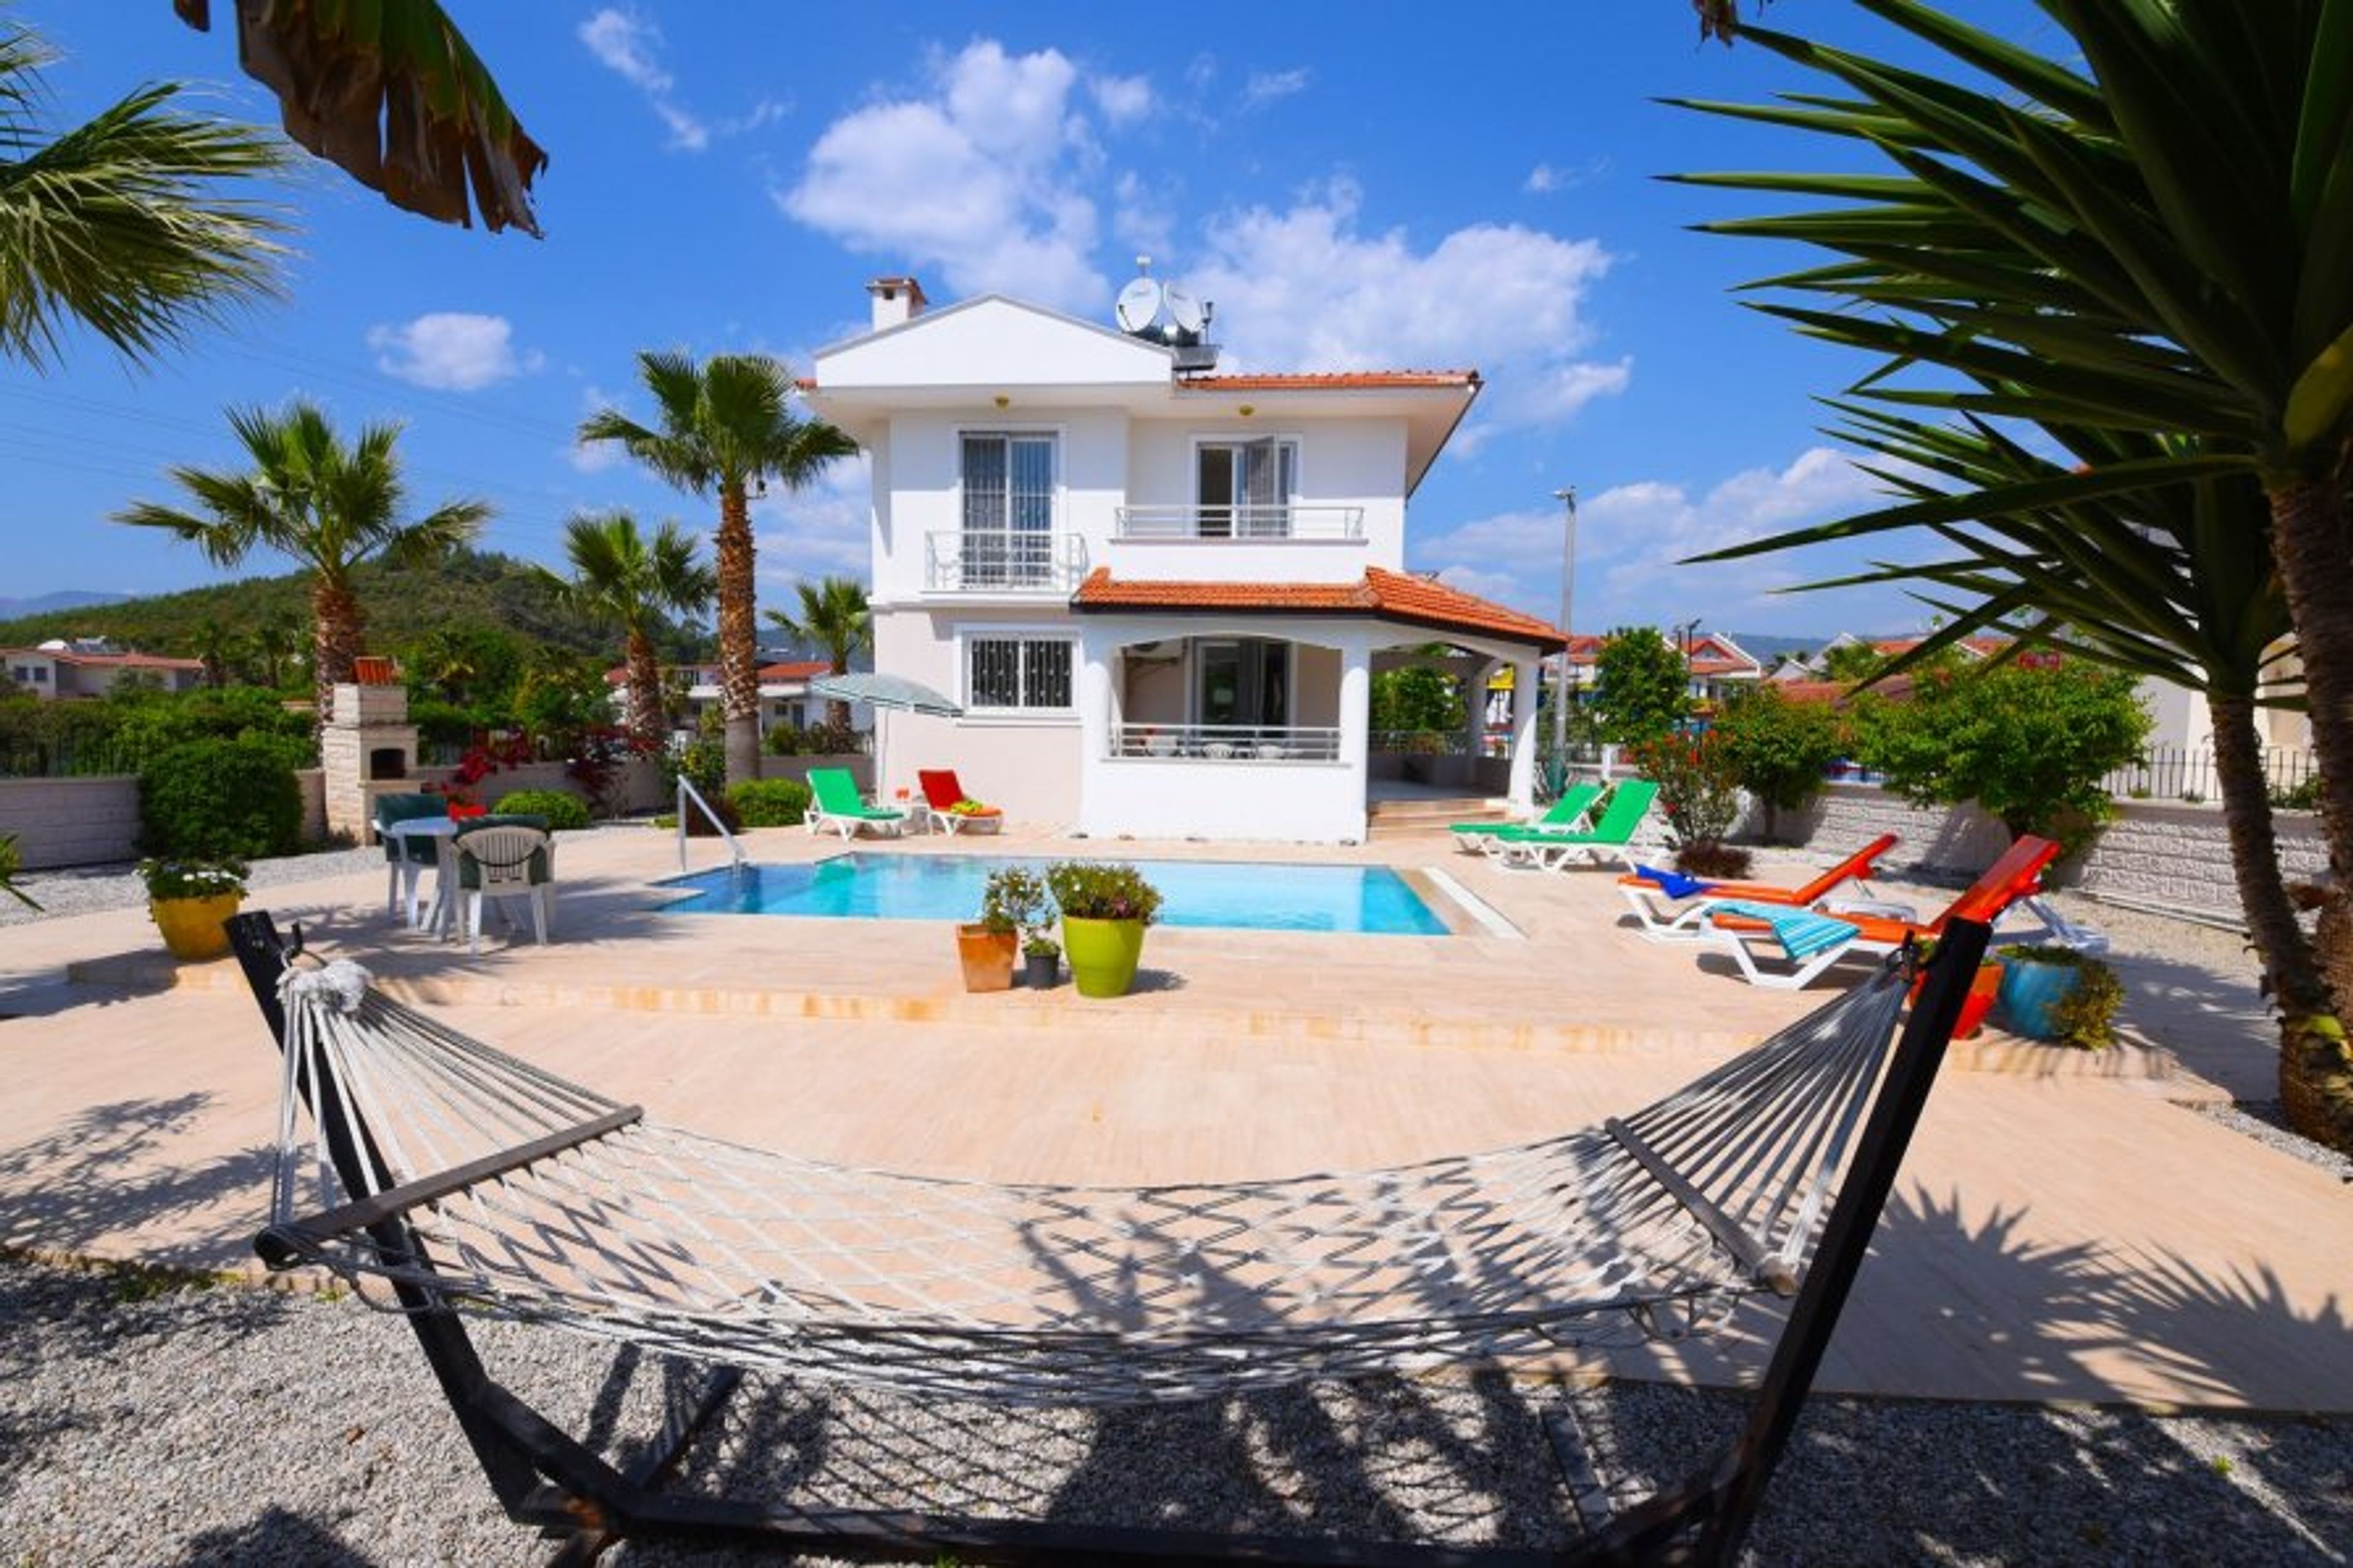 Villa, pool, garden and hammock